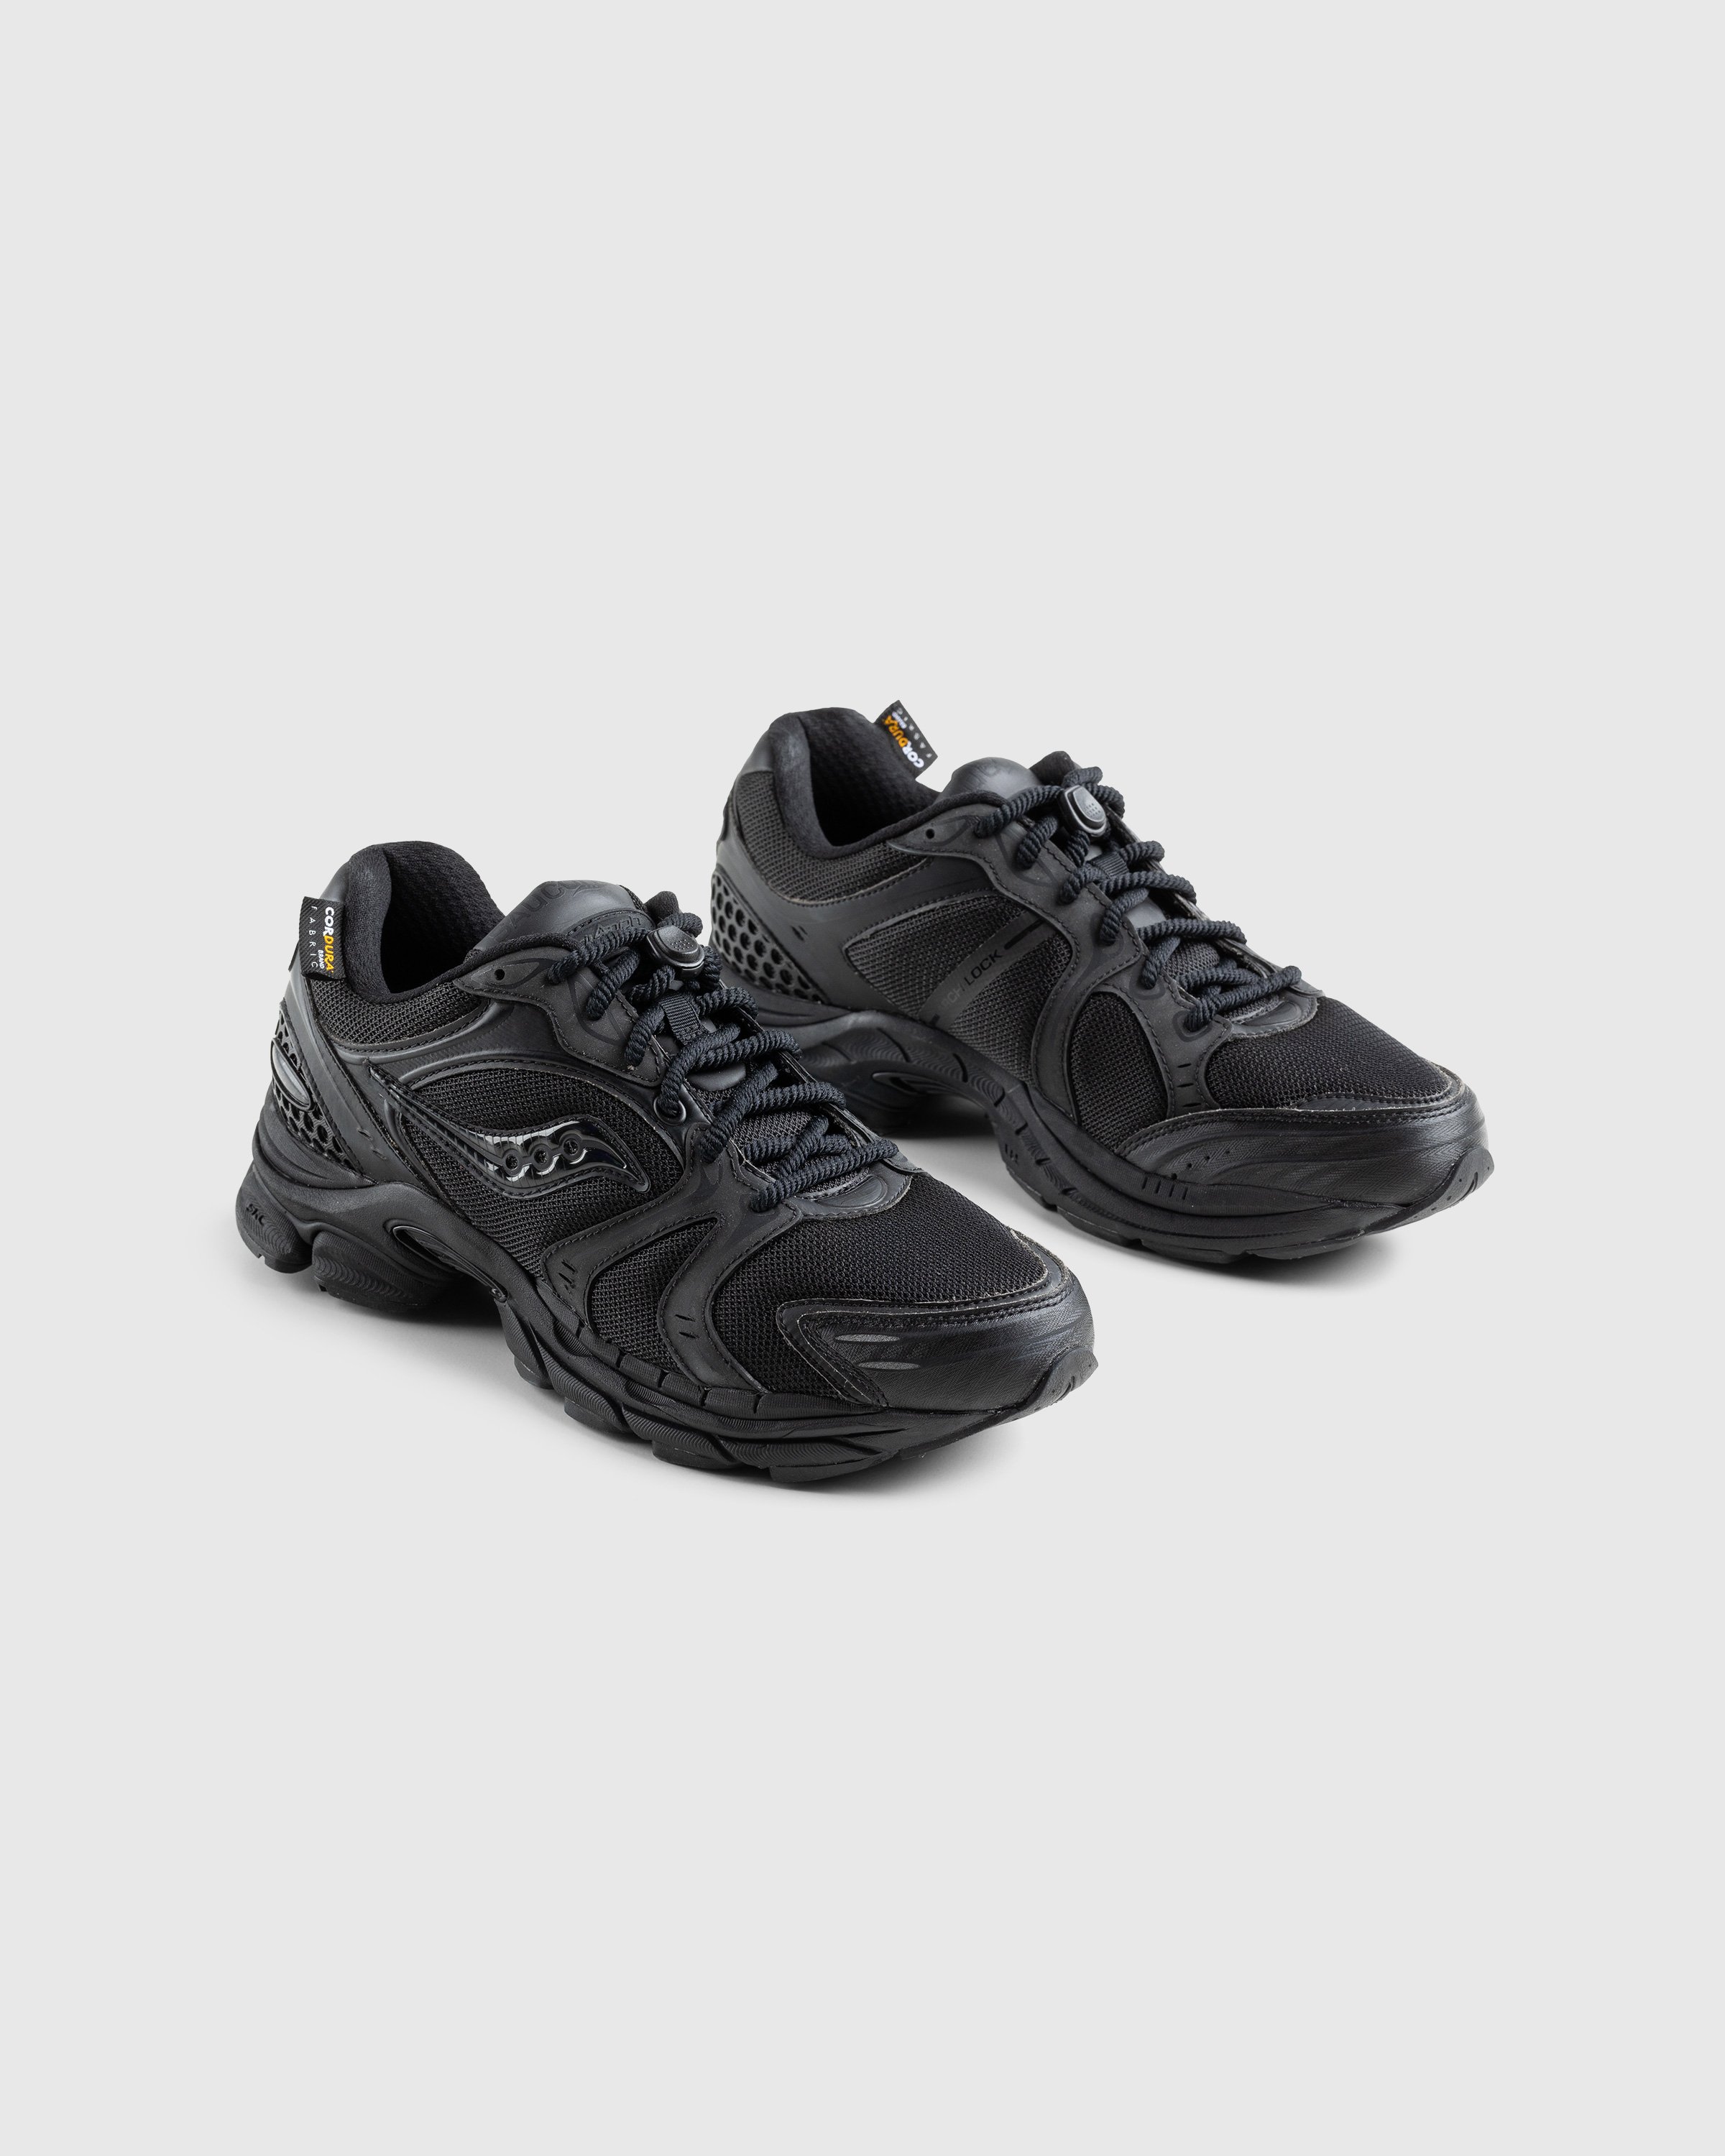 Saucony - ProGrid Triumph 4 Black - Footwear - Black - Image 4